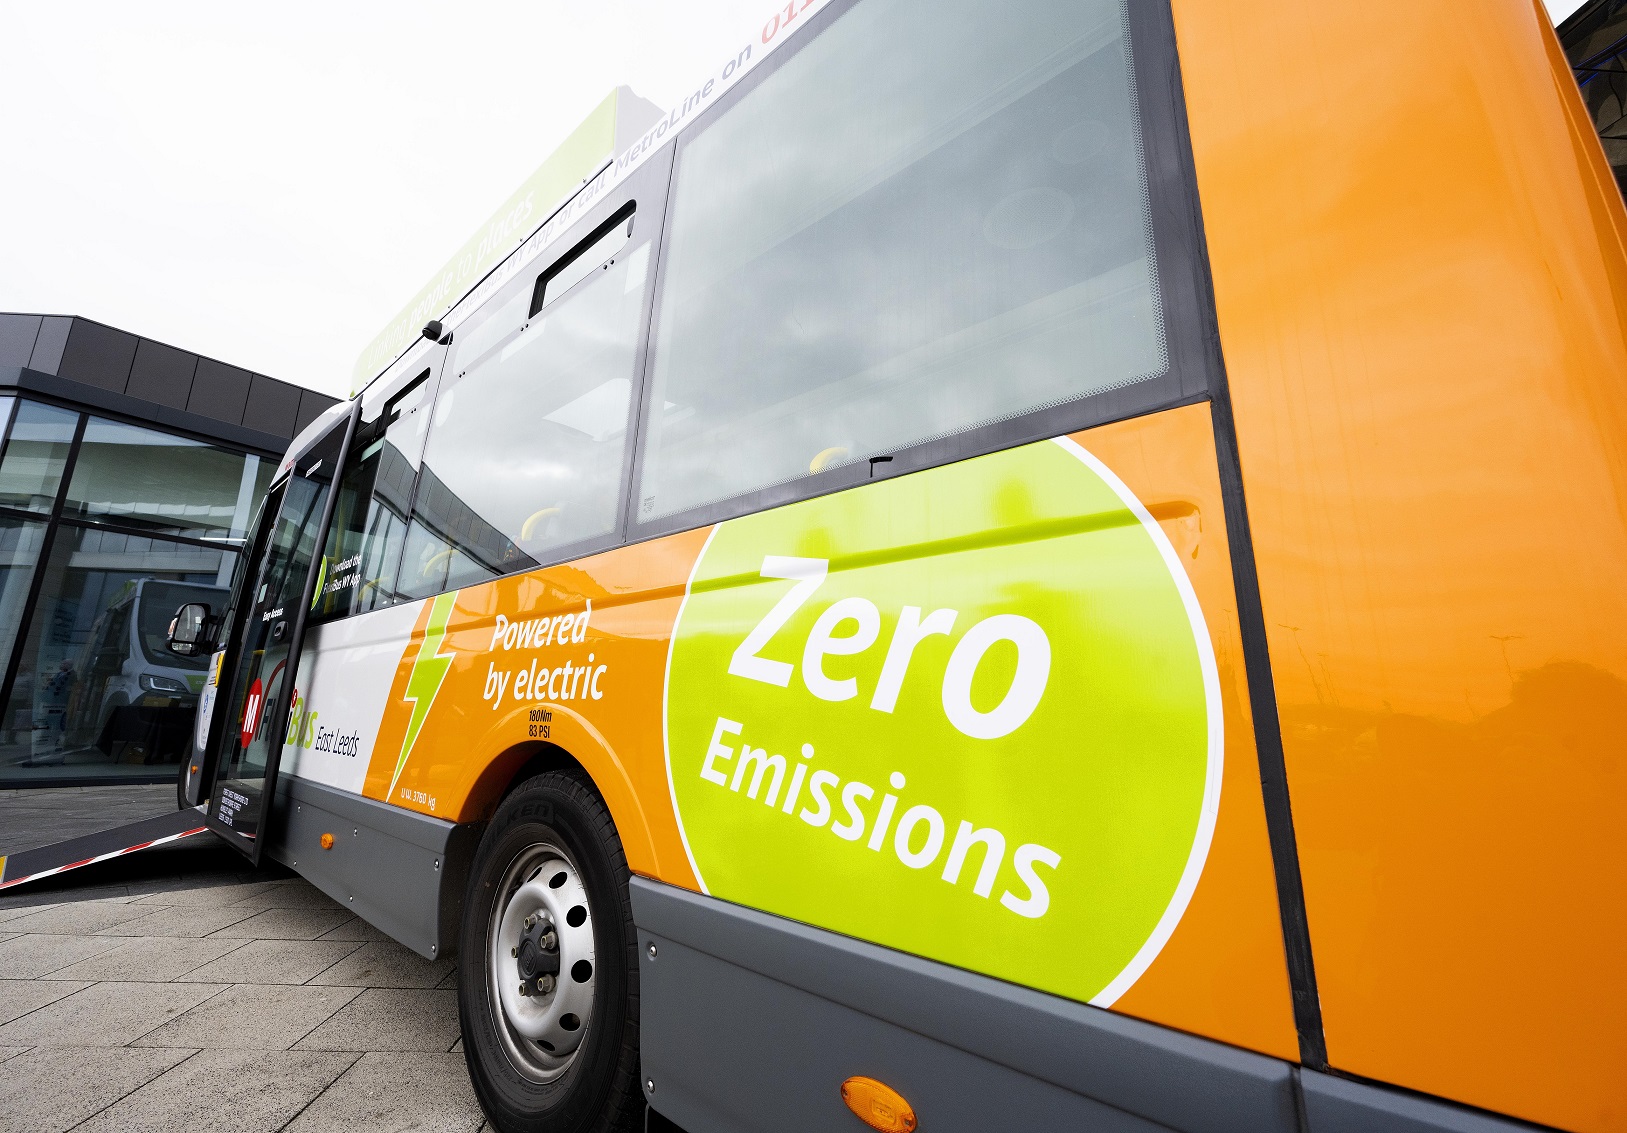 Zero emission minibuses must not be forgotten, says Zemo Partnership